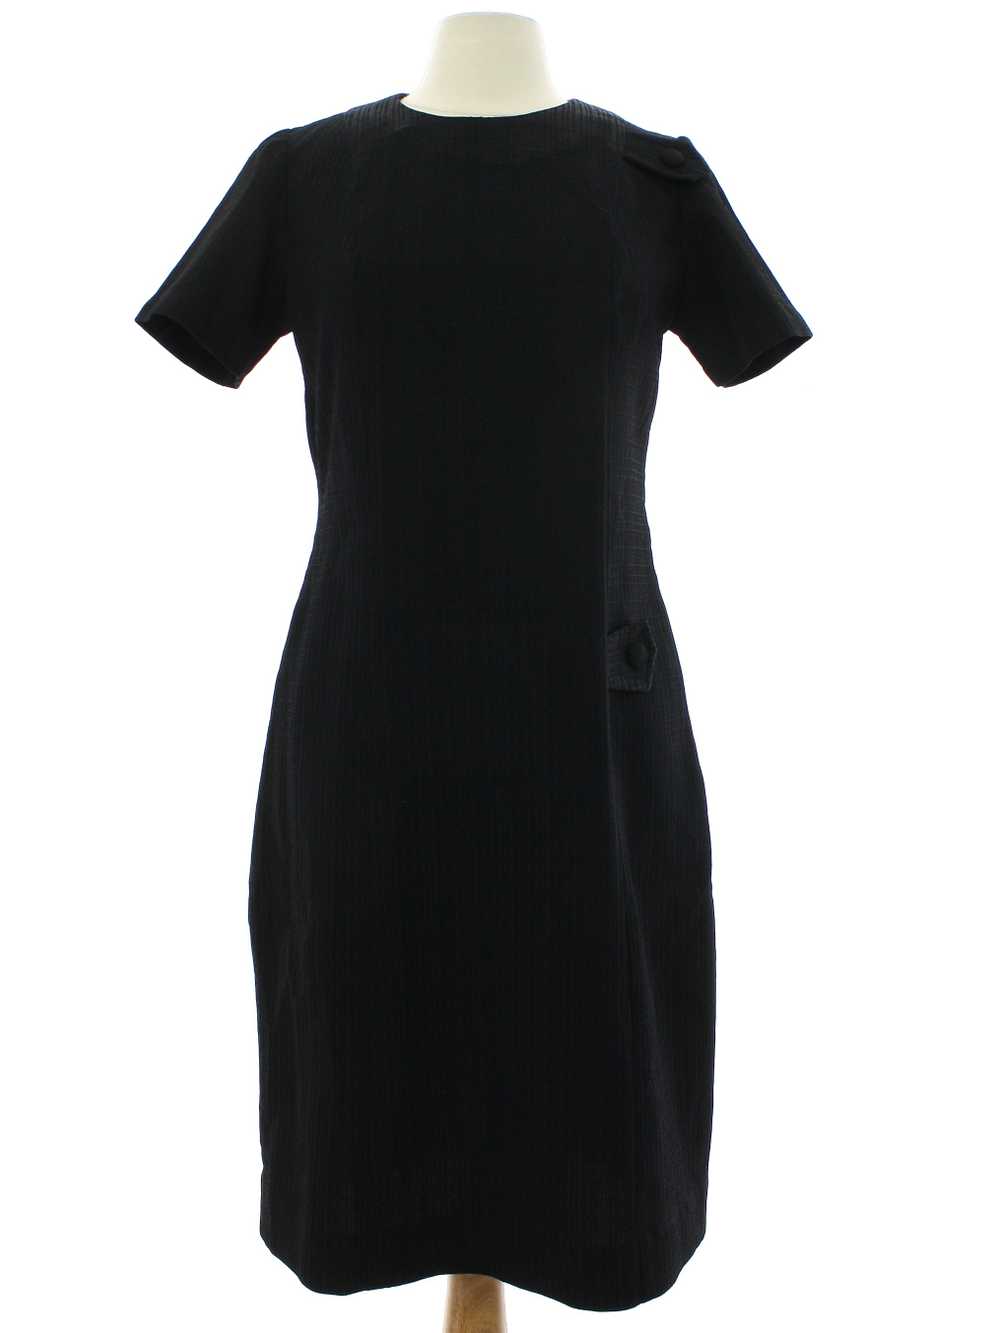 1960's British Lady Mod Knit Little Black Dress - image 1